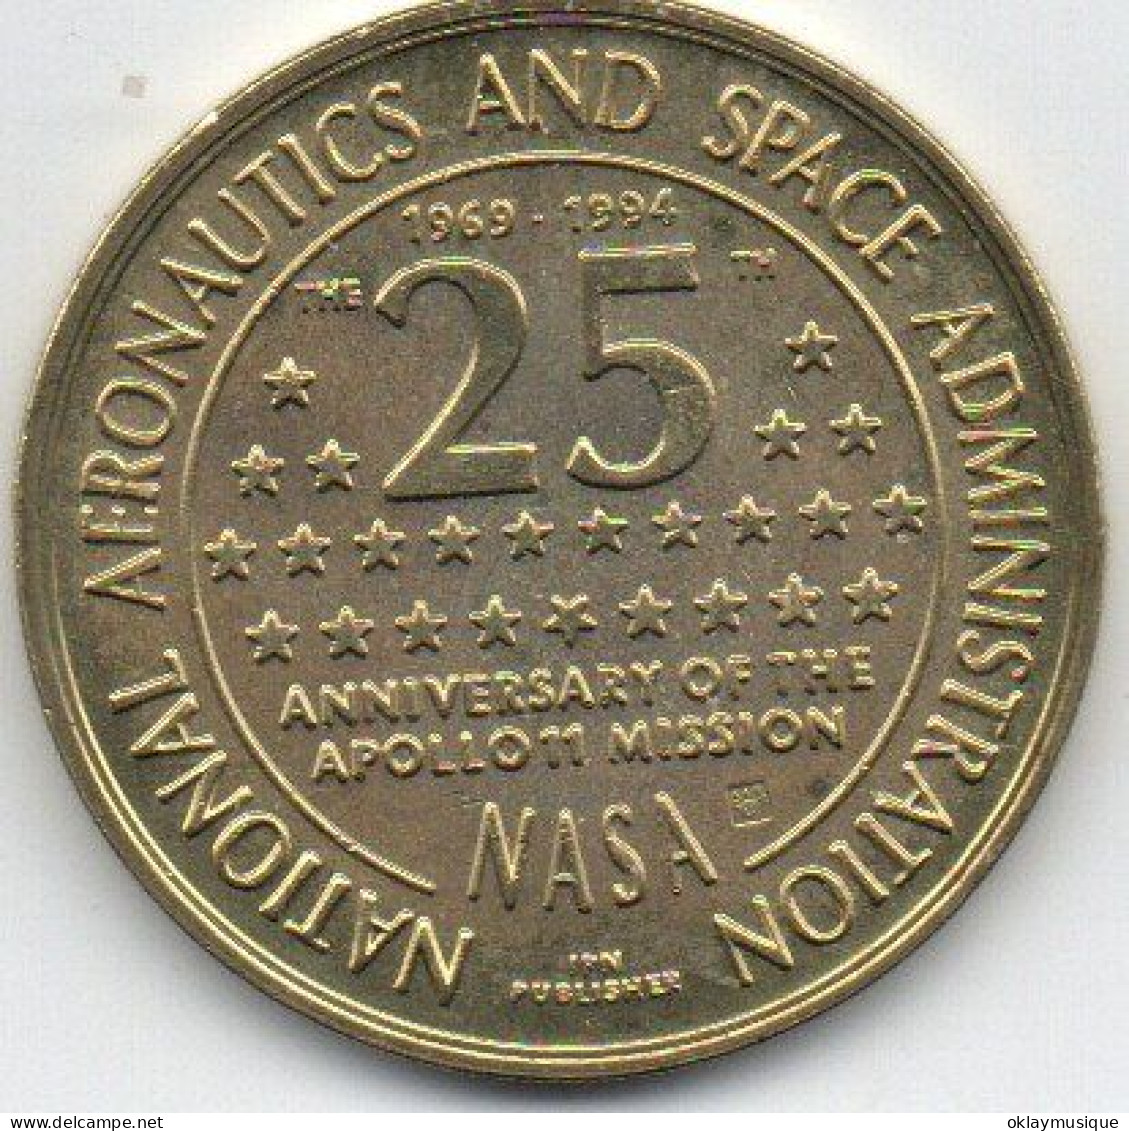 Medaille 25éme Anniversaire De La Mission Appolo 11 1969-1994  (rare) - Casino